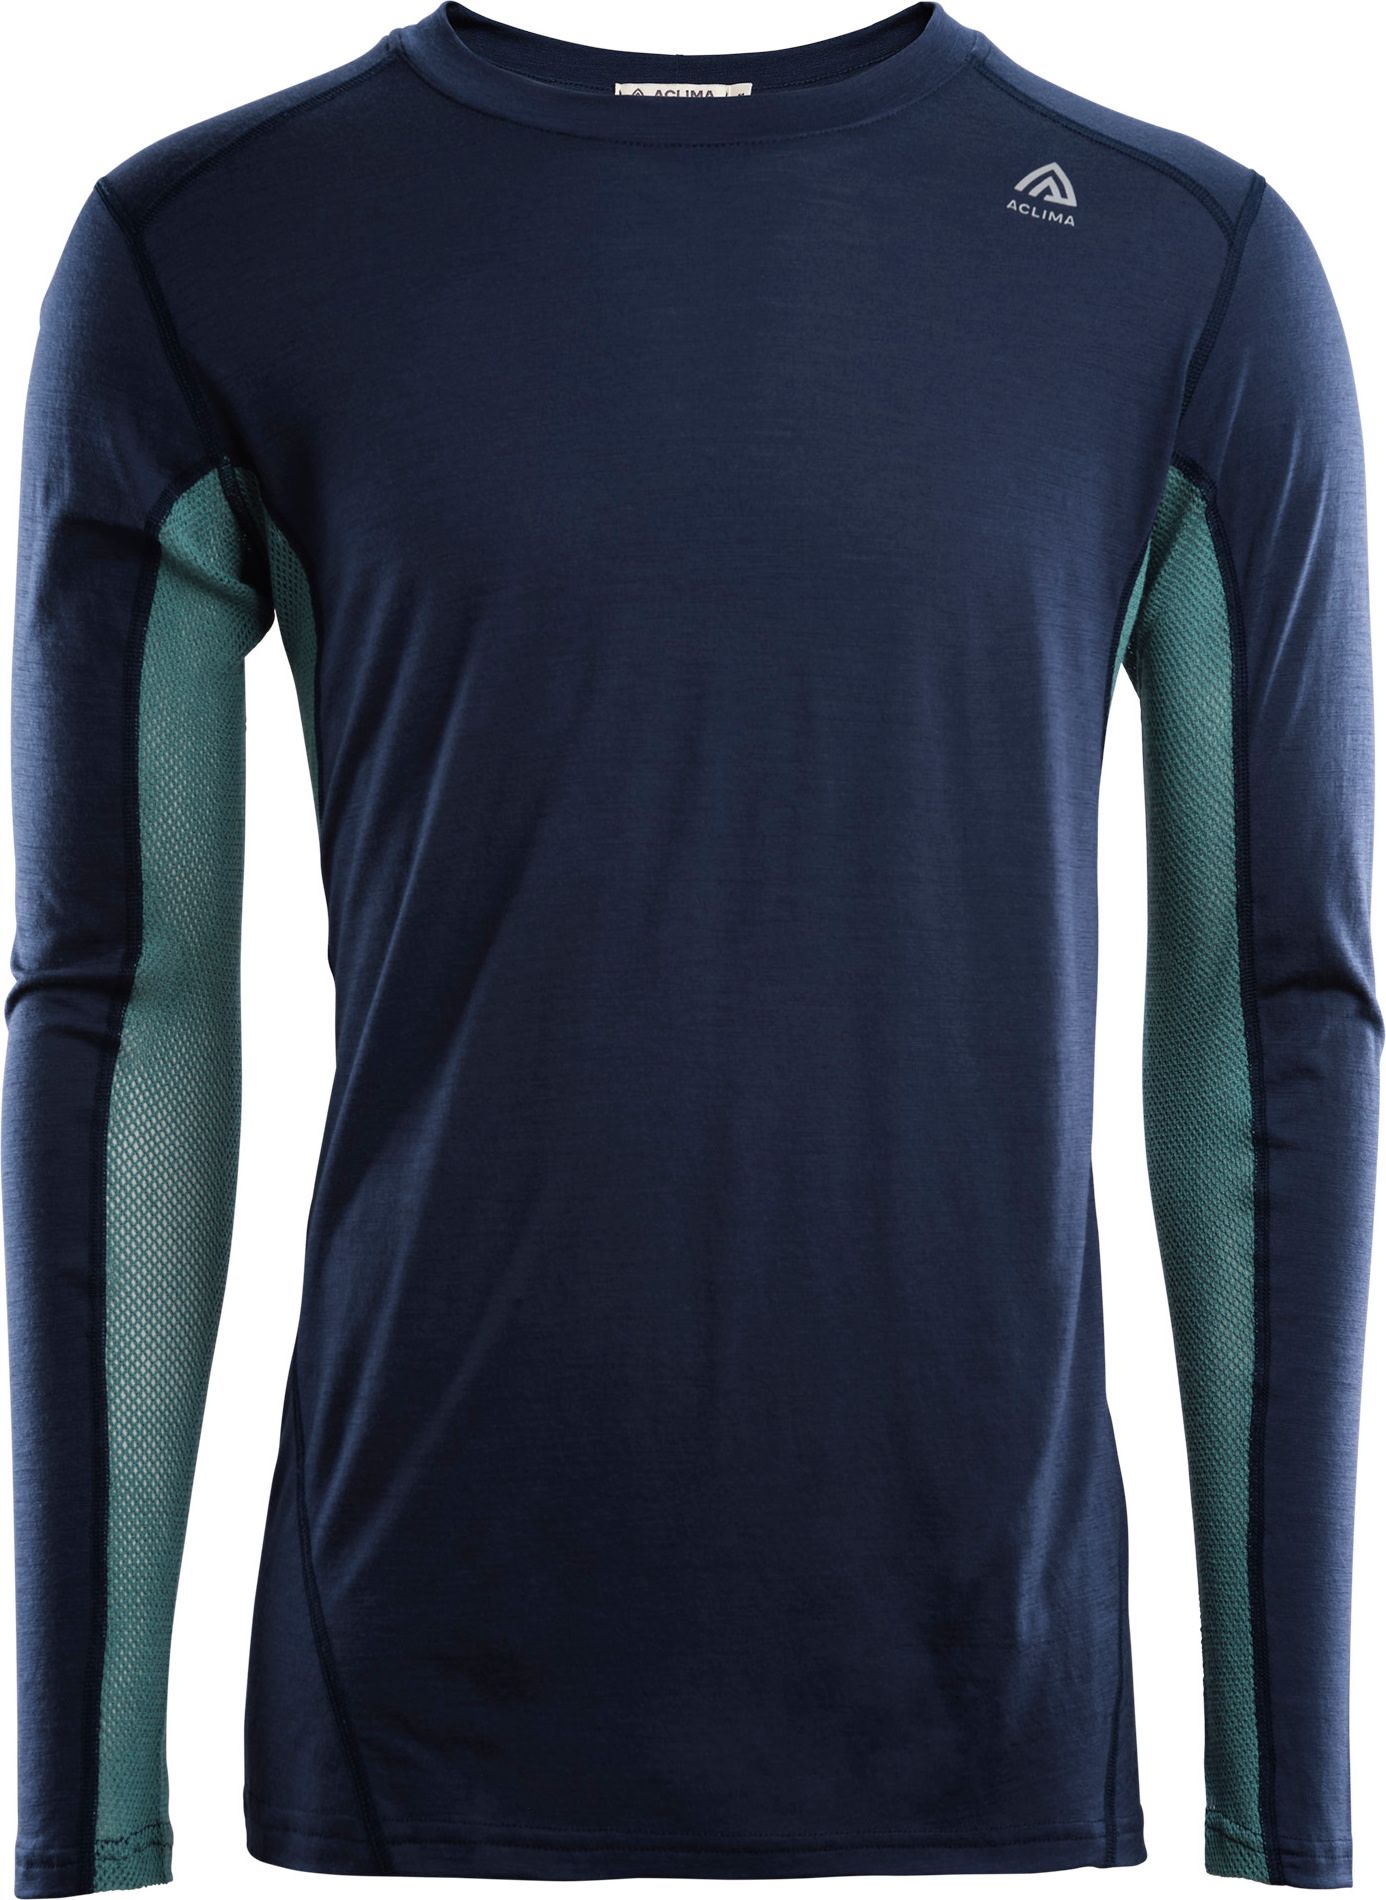 LightWool Sports Shirt Man Navy Blazer / North Atlantic